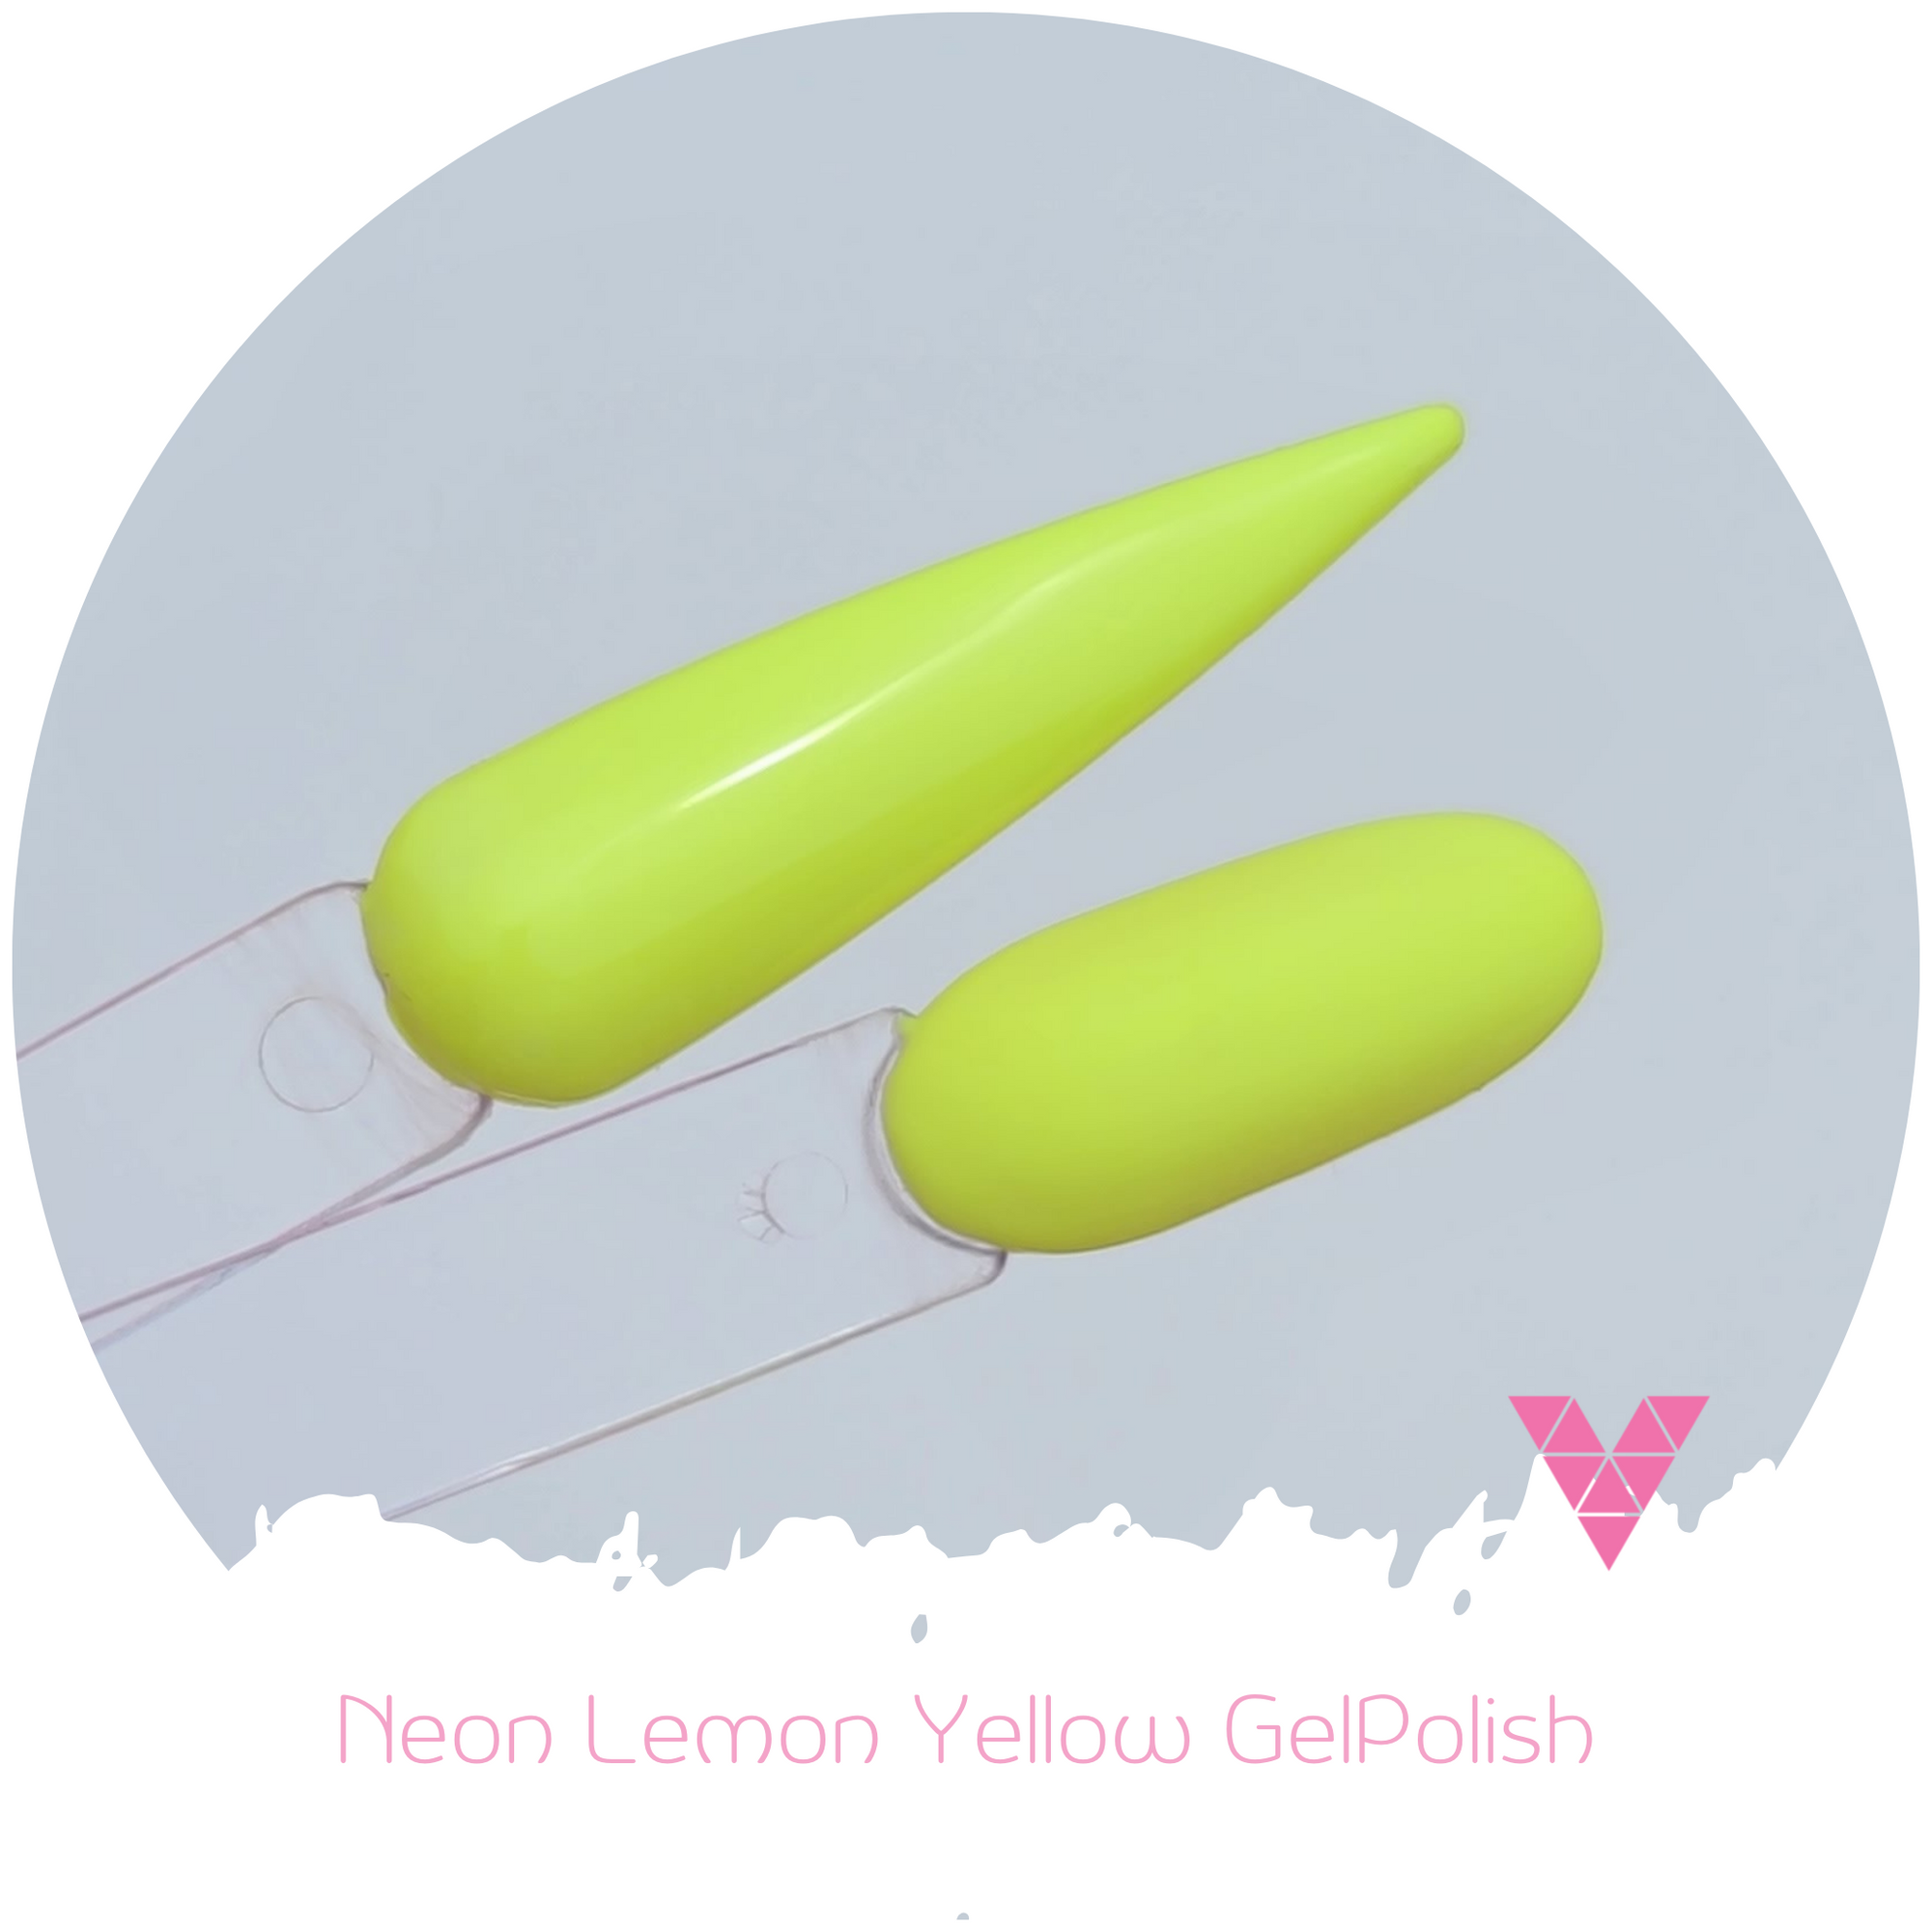 Neon Lemon Yellow GelPolish